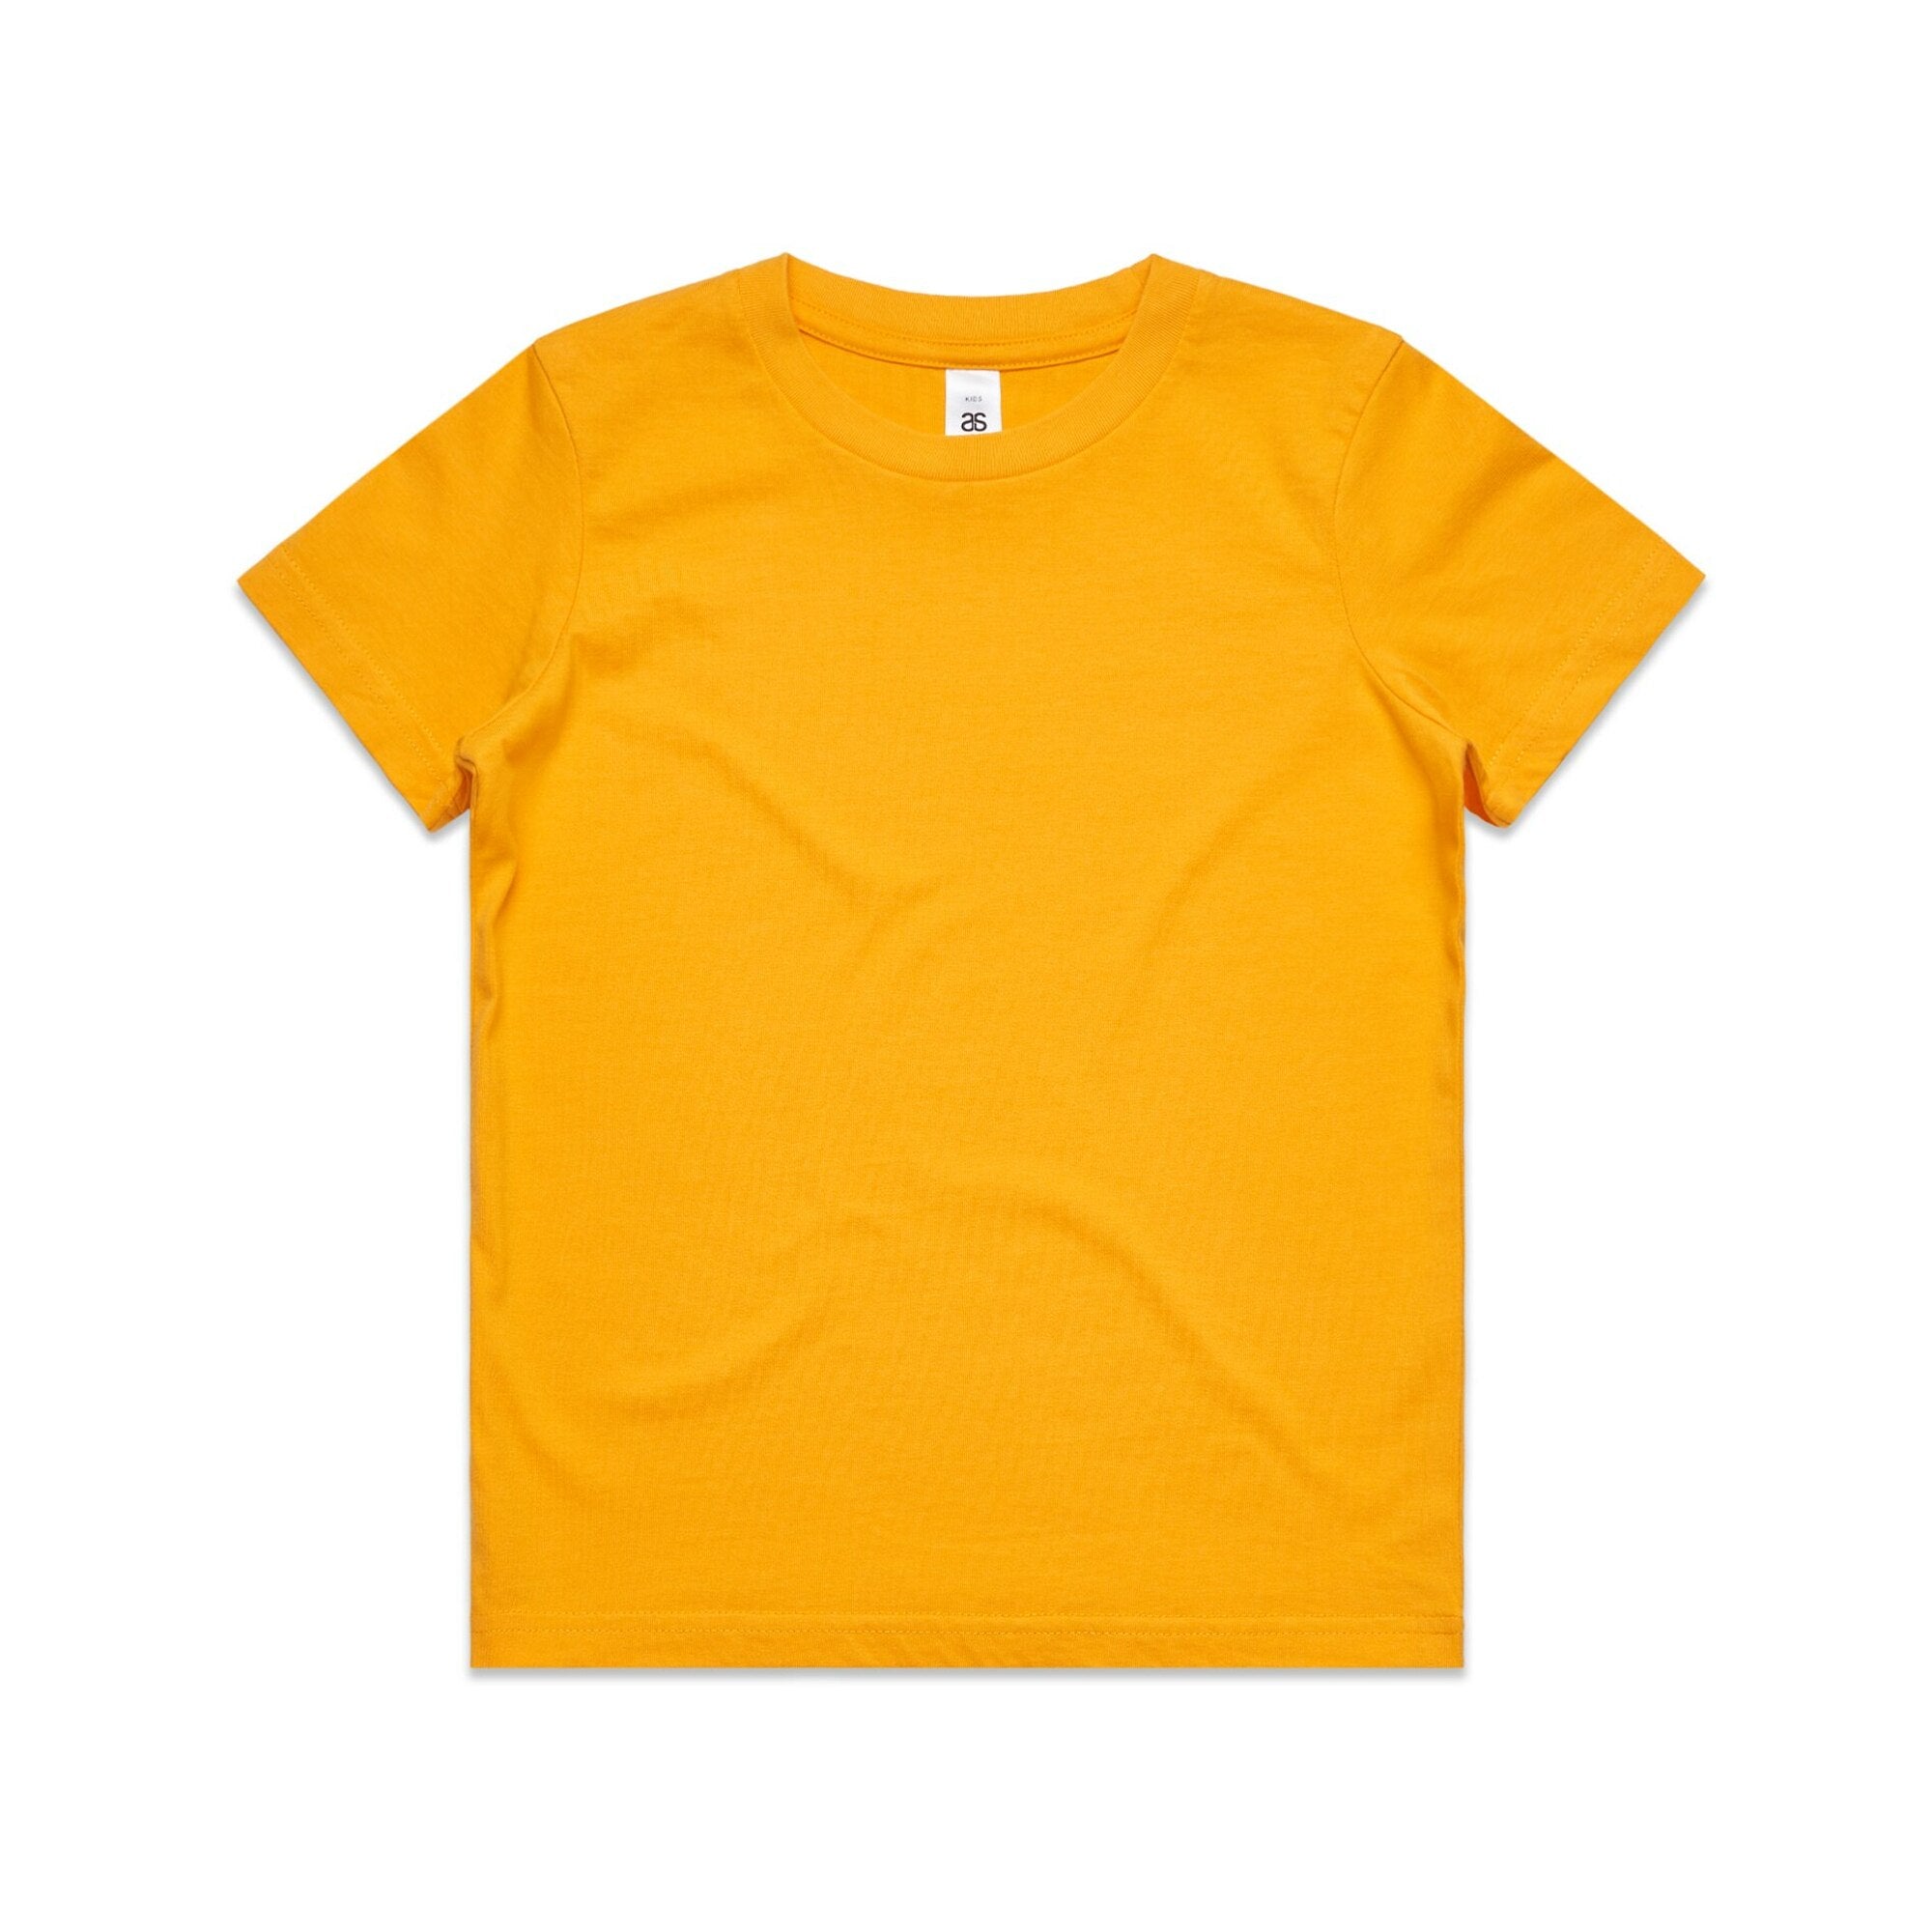 AS Colour T-Shirt | Year 8 Leavers Gear 2022